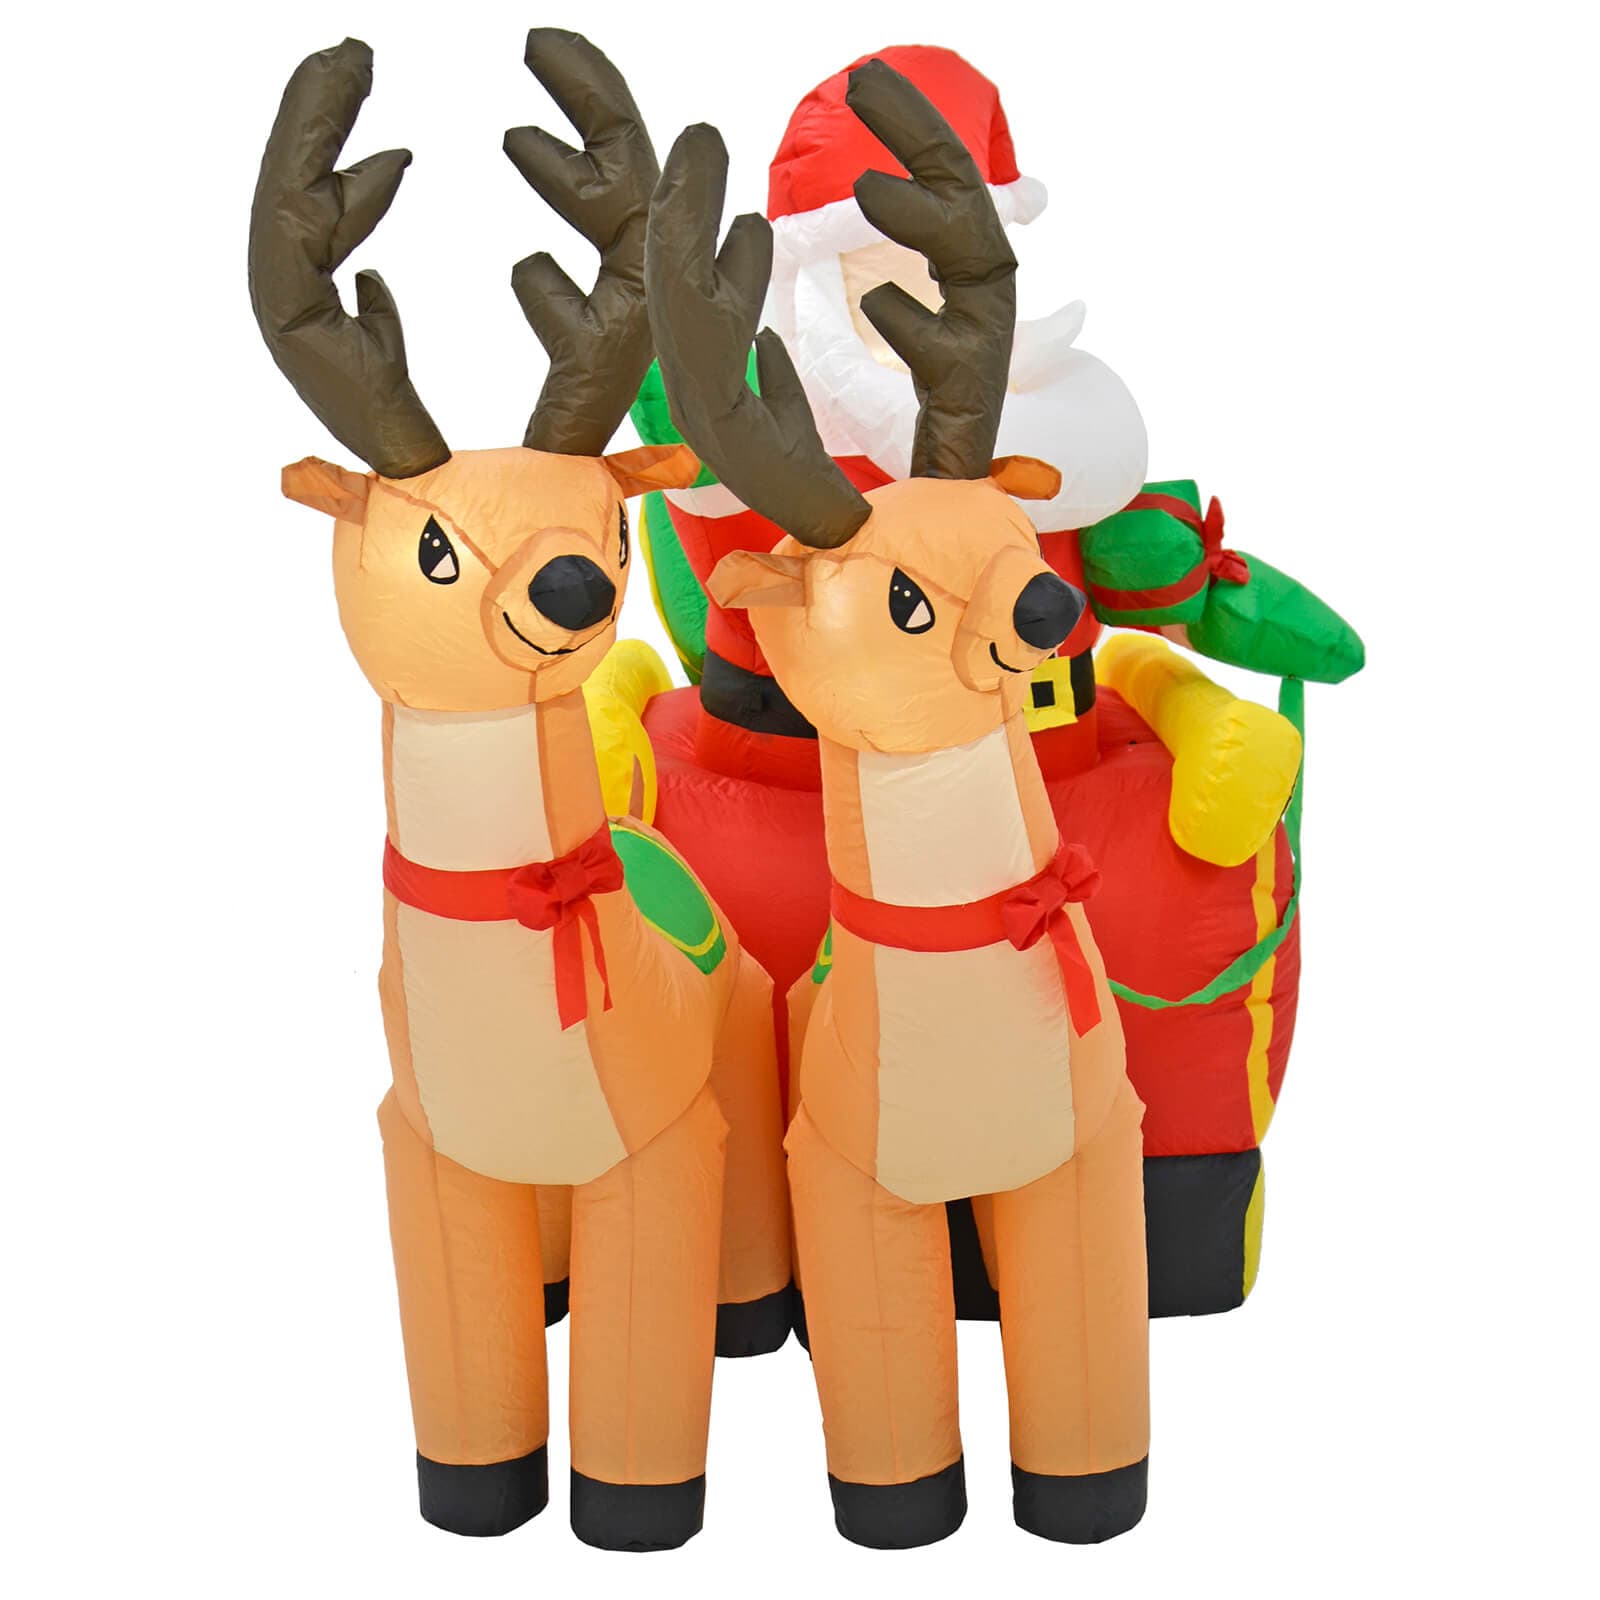 2 reindeer and Santa on sleigh large inflatable Christmas decoration